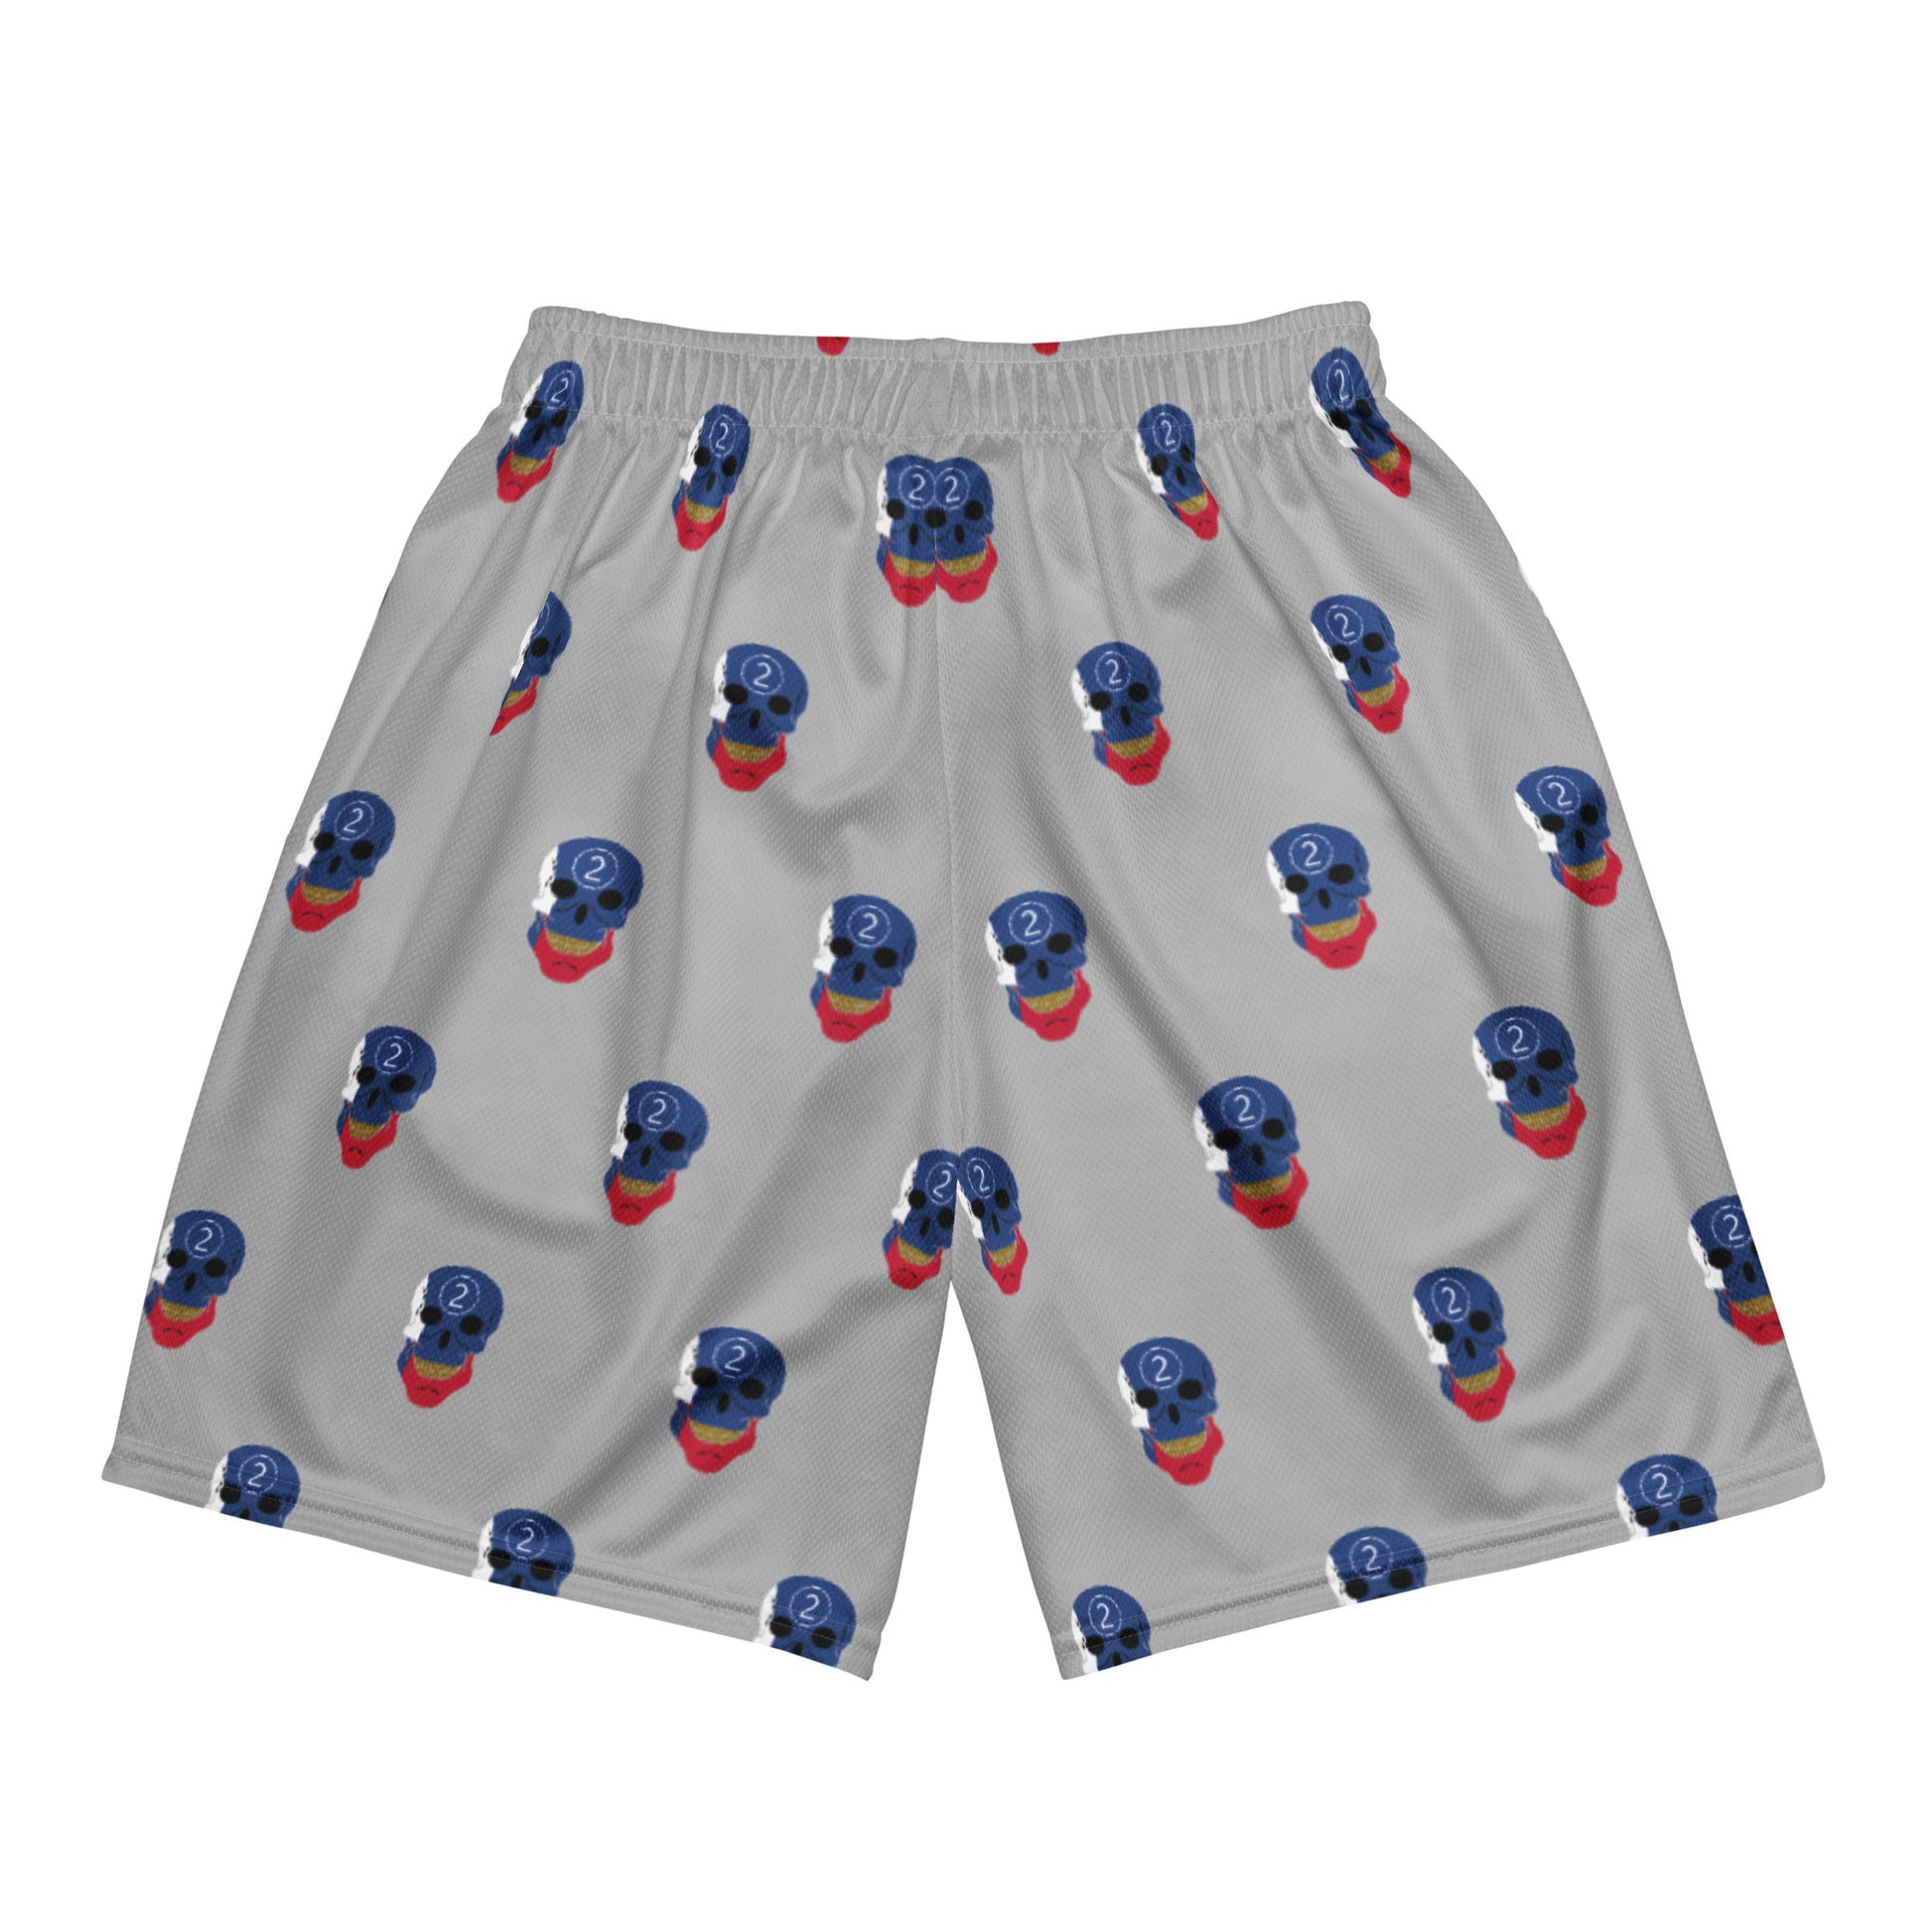 Unisex Clippers mesh shorts - Skull Dayz